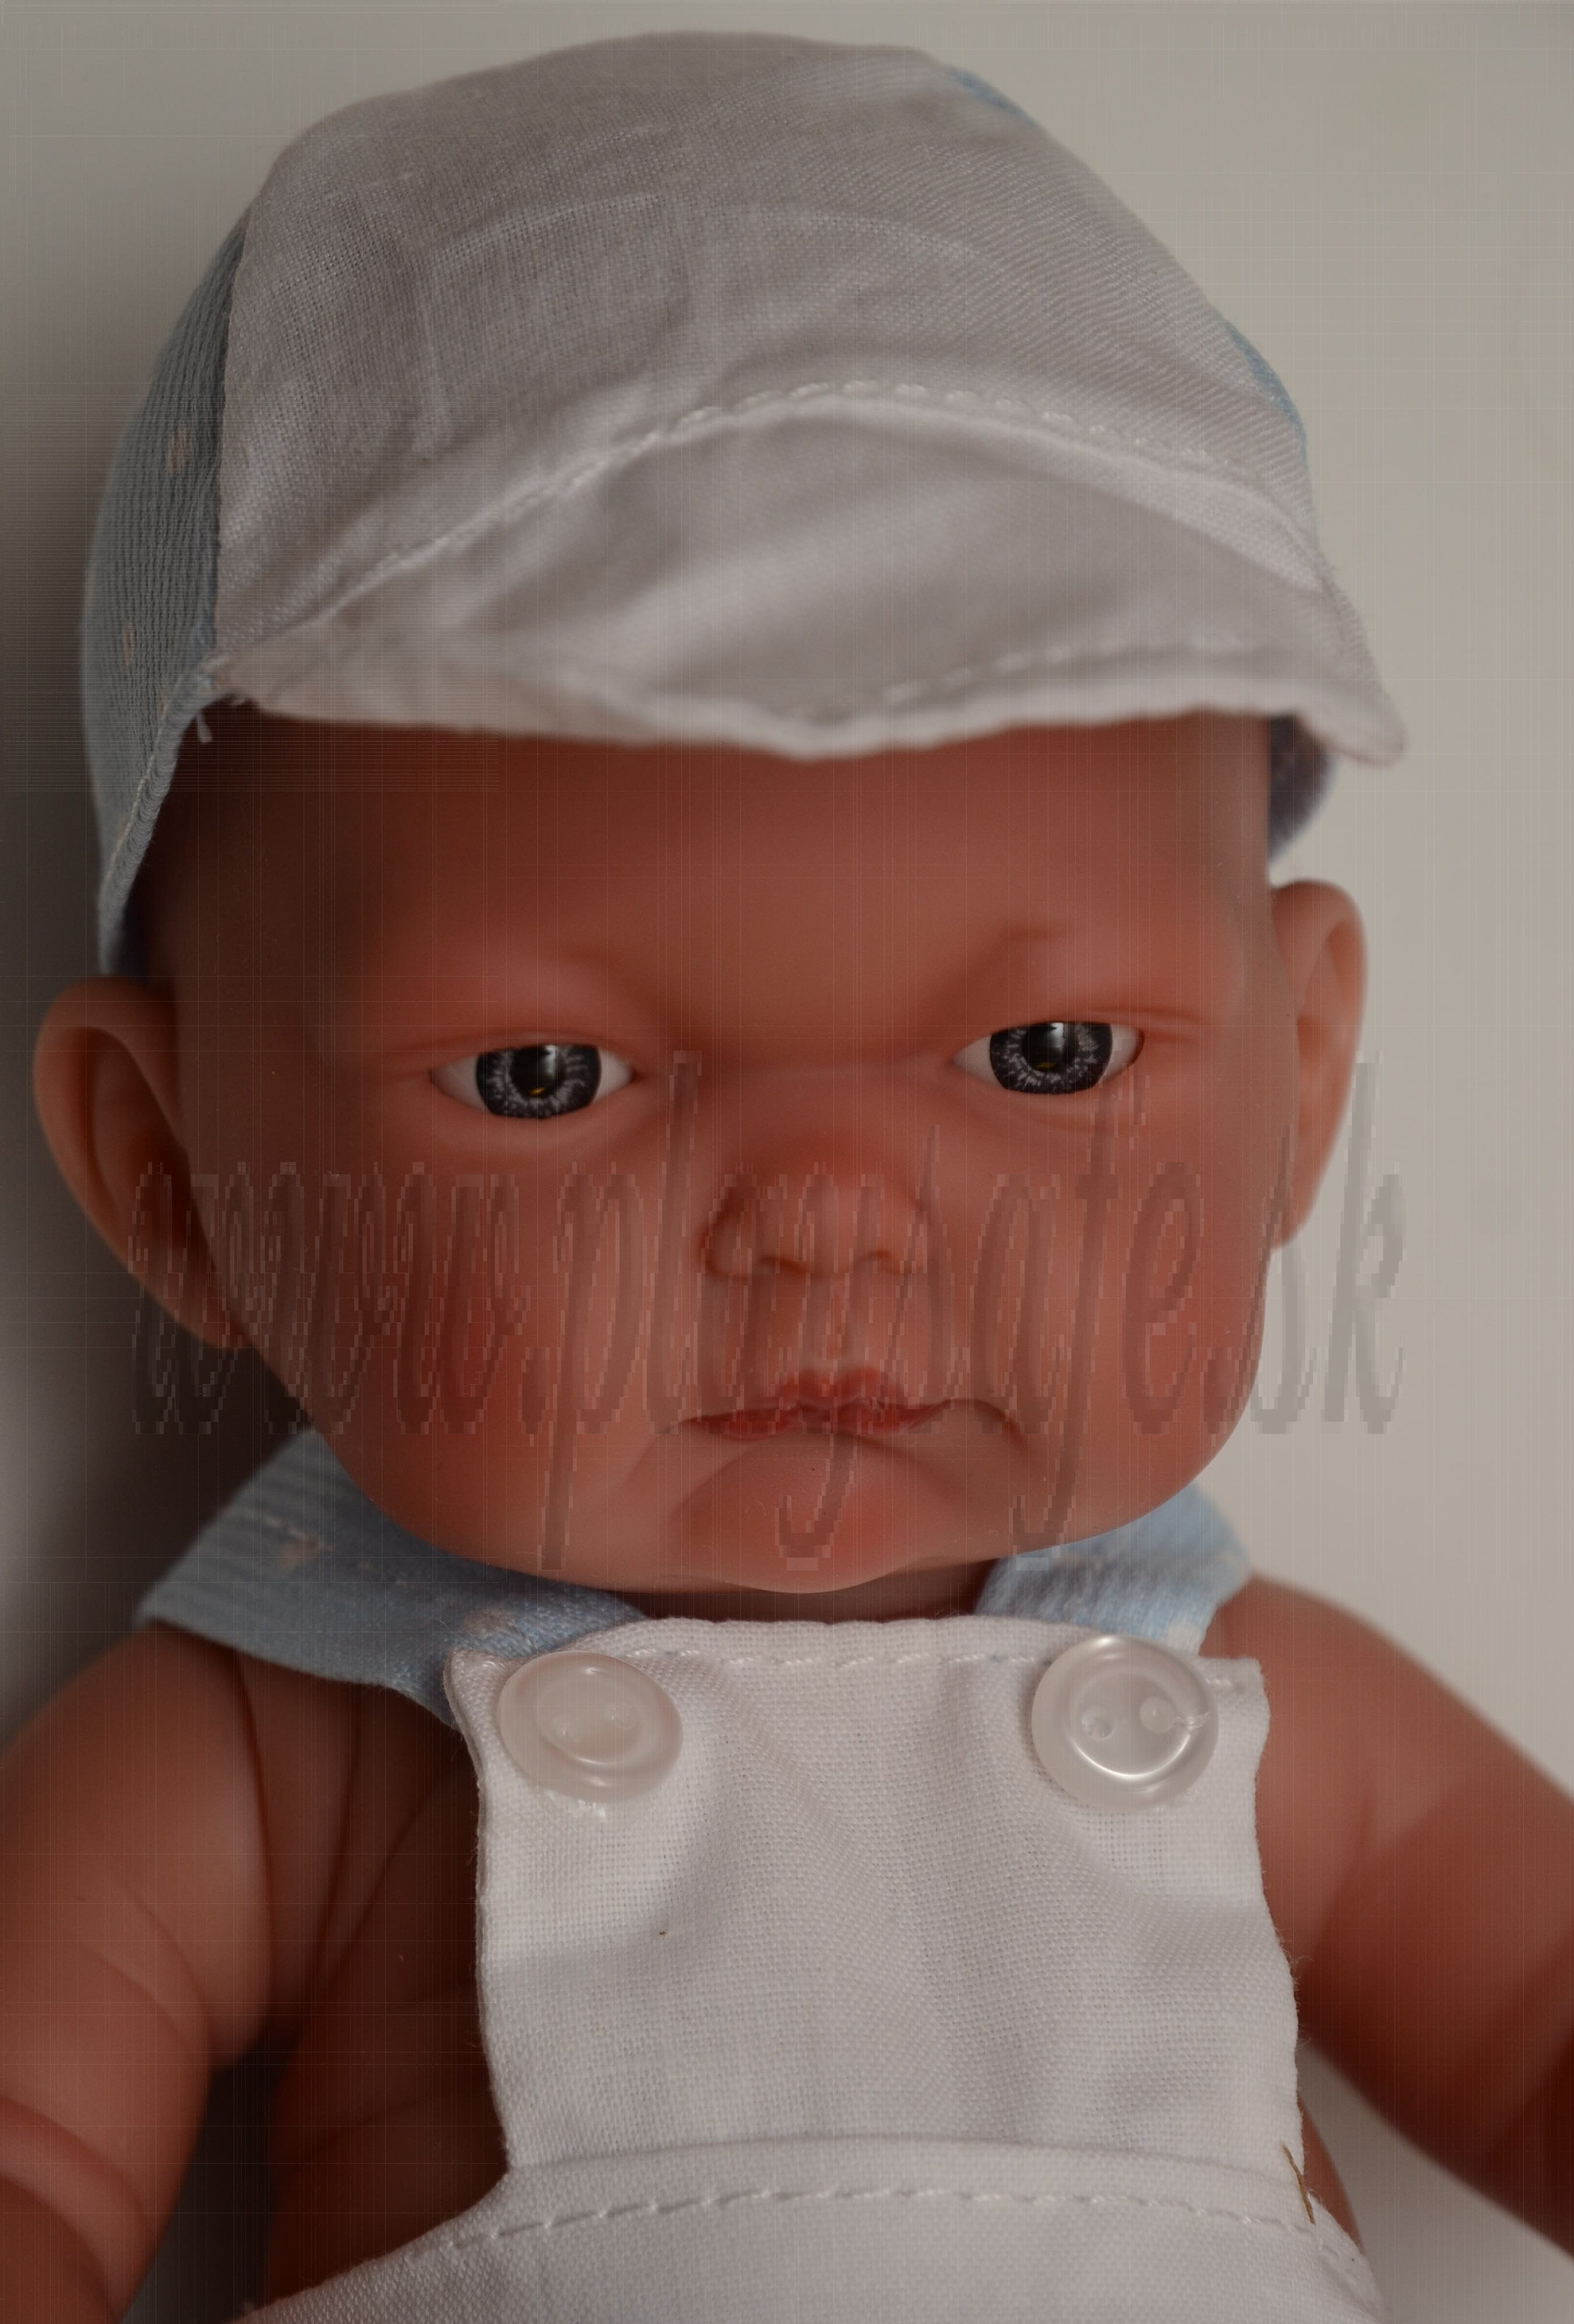 Antonio Juan Pitu Expositor Baby Boy Doll, 26cm